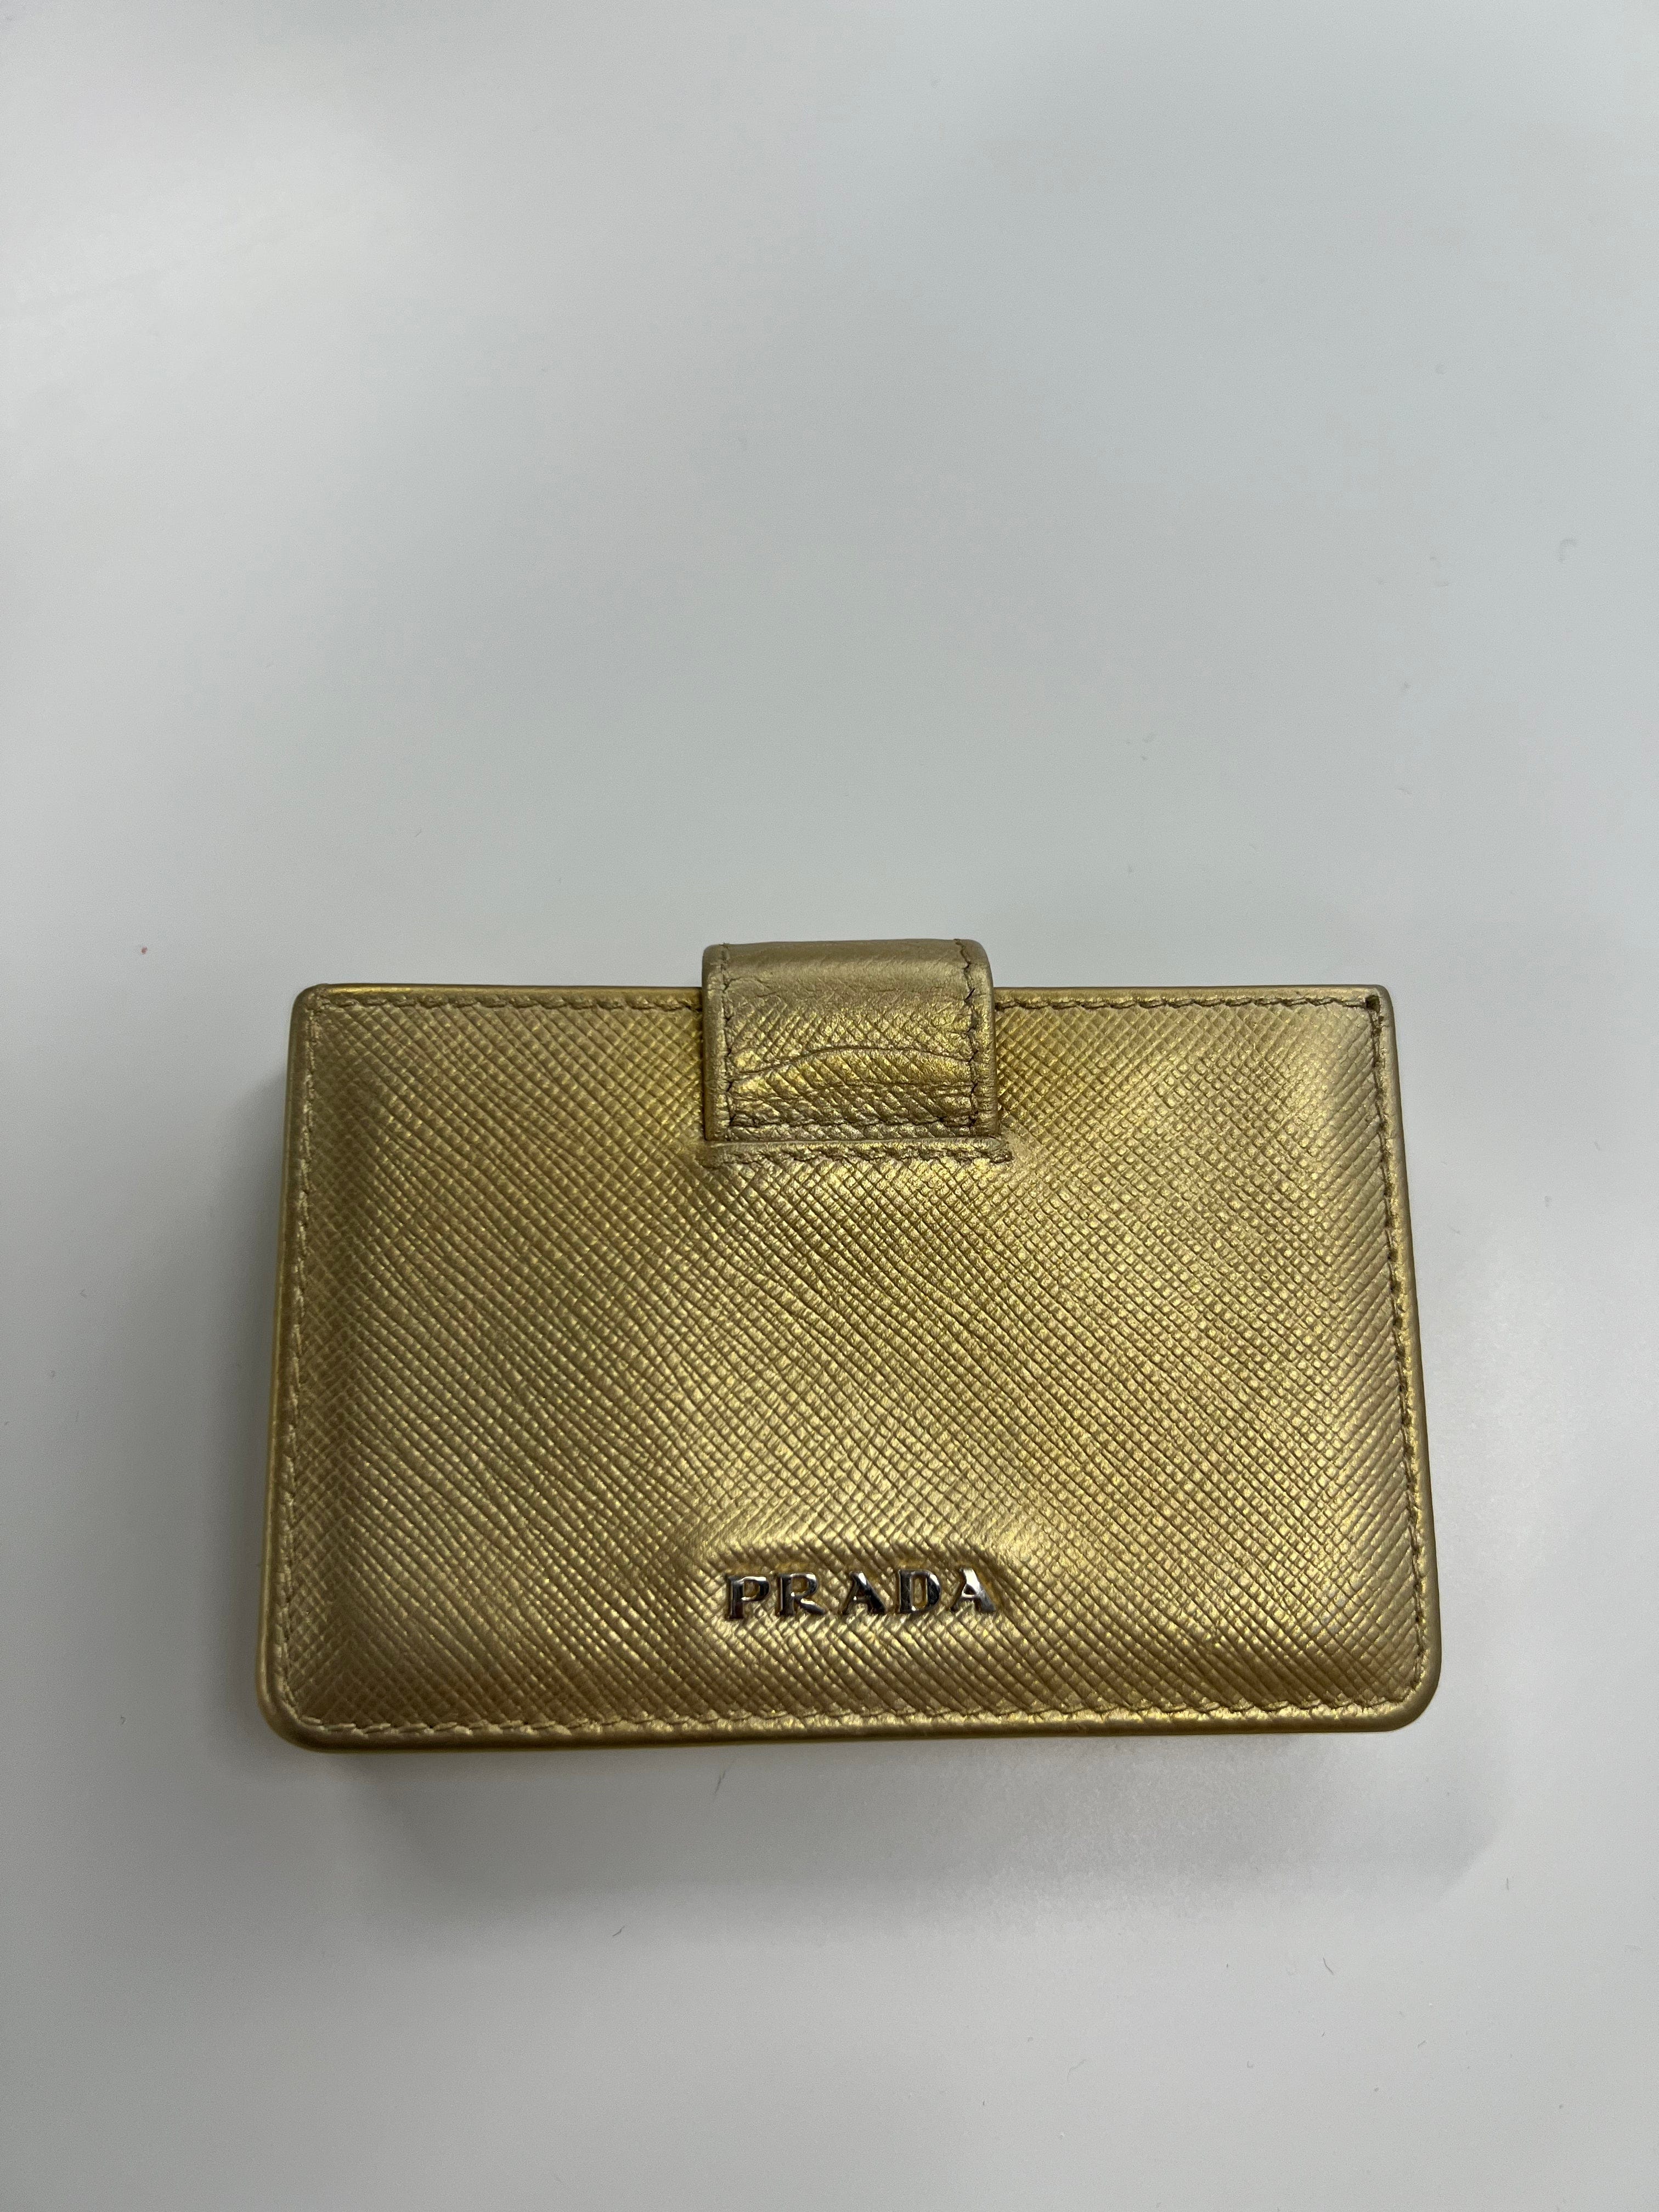 Prada Prada Gold Leather Wallet RJL1646